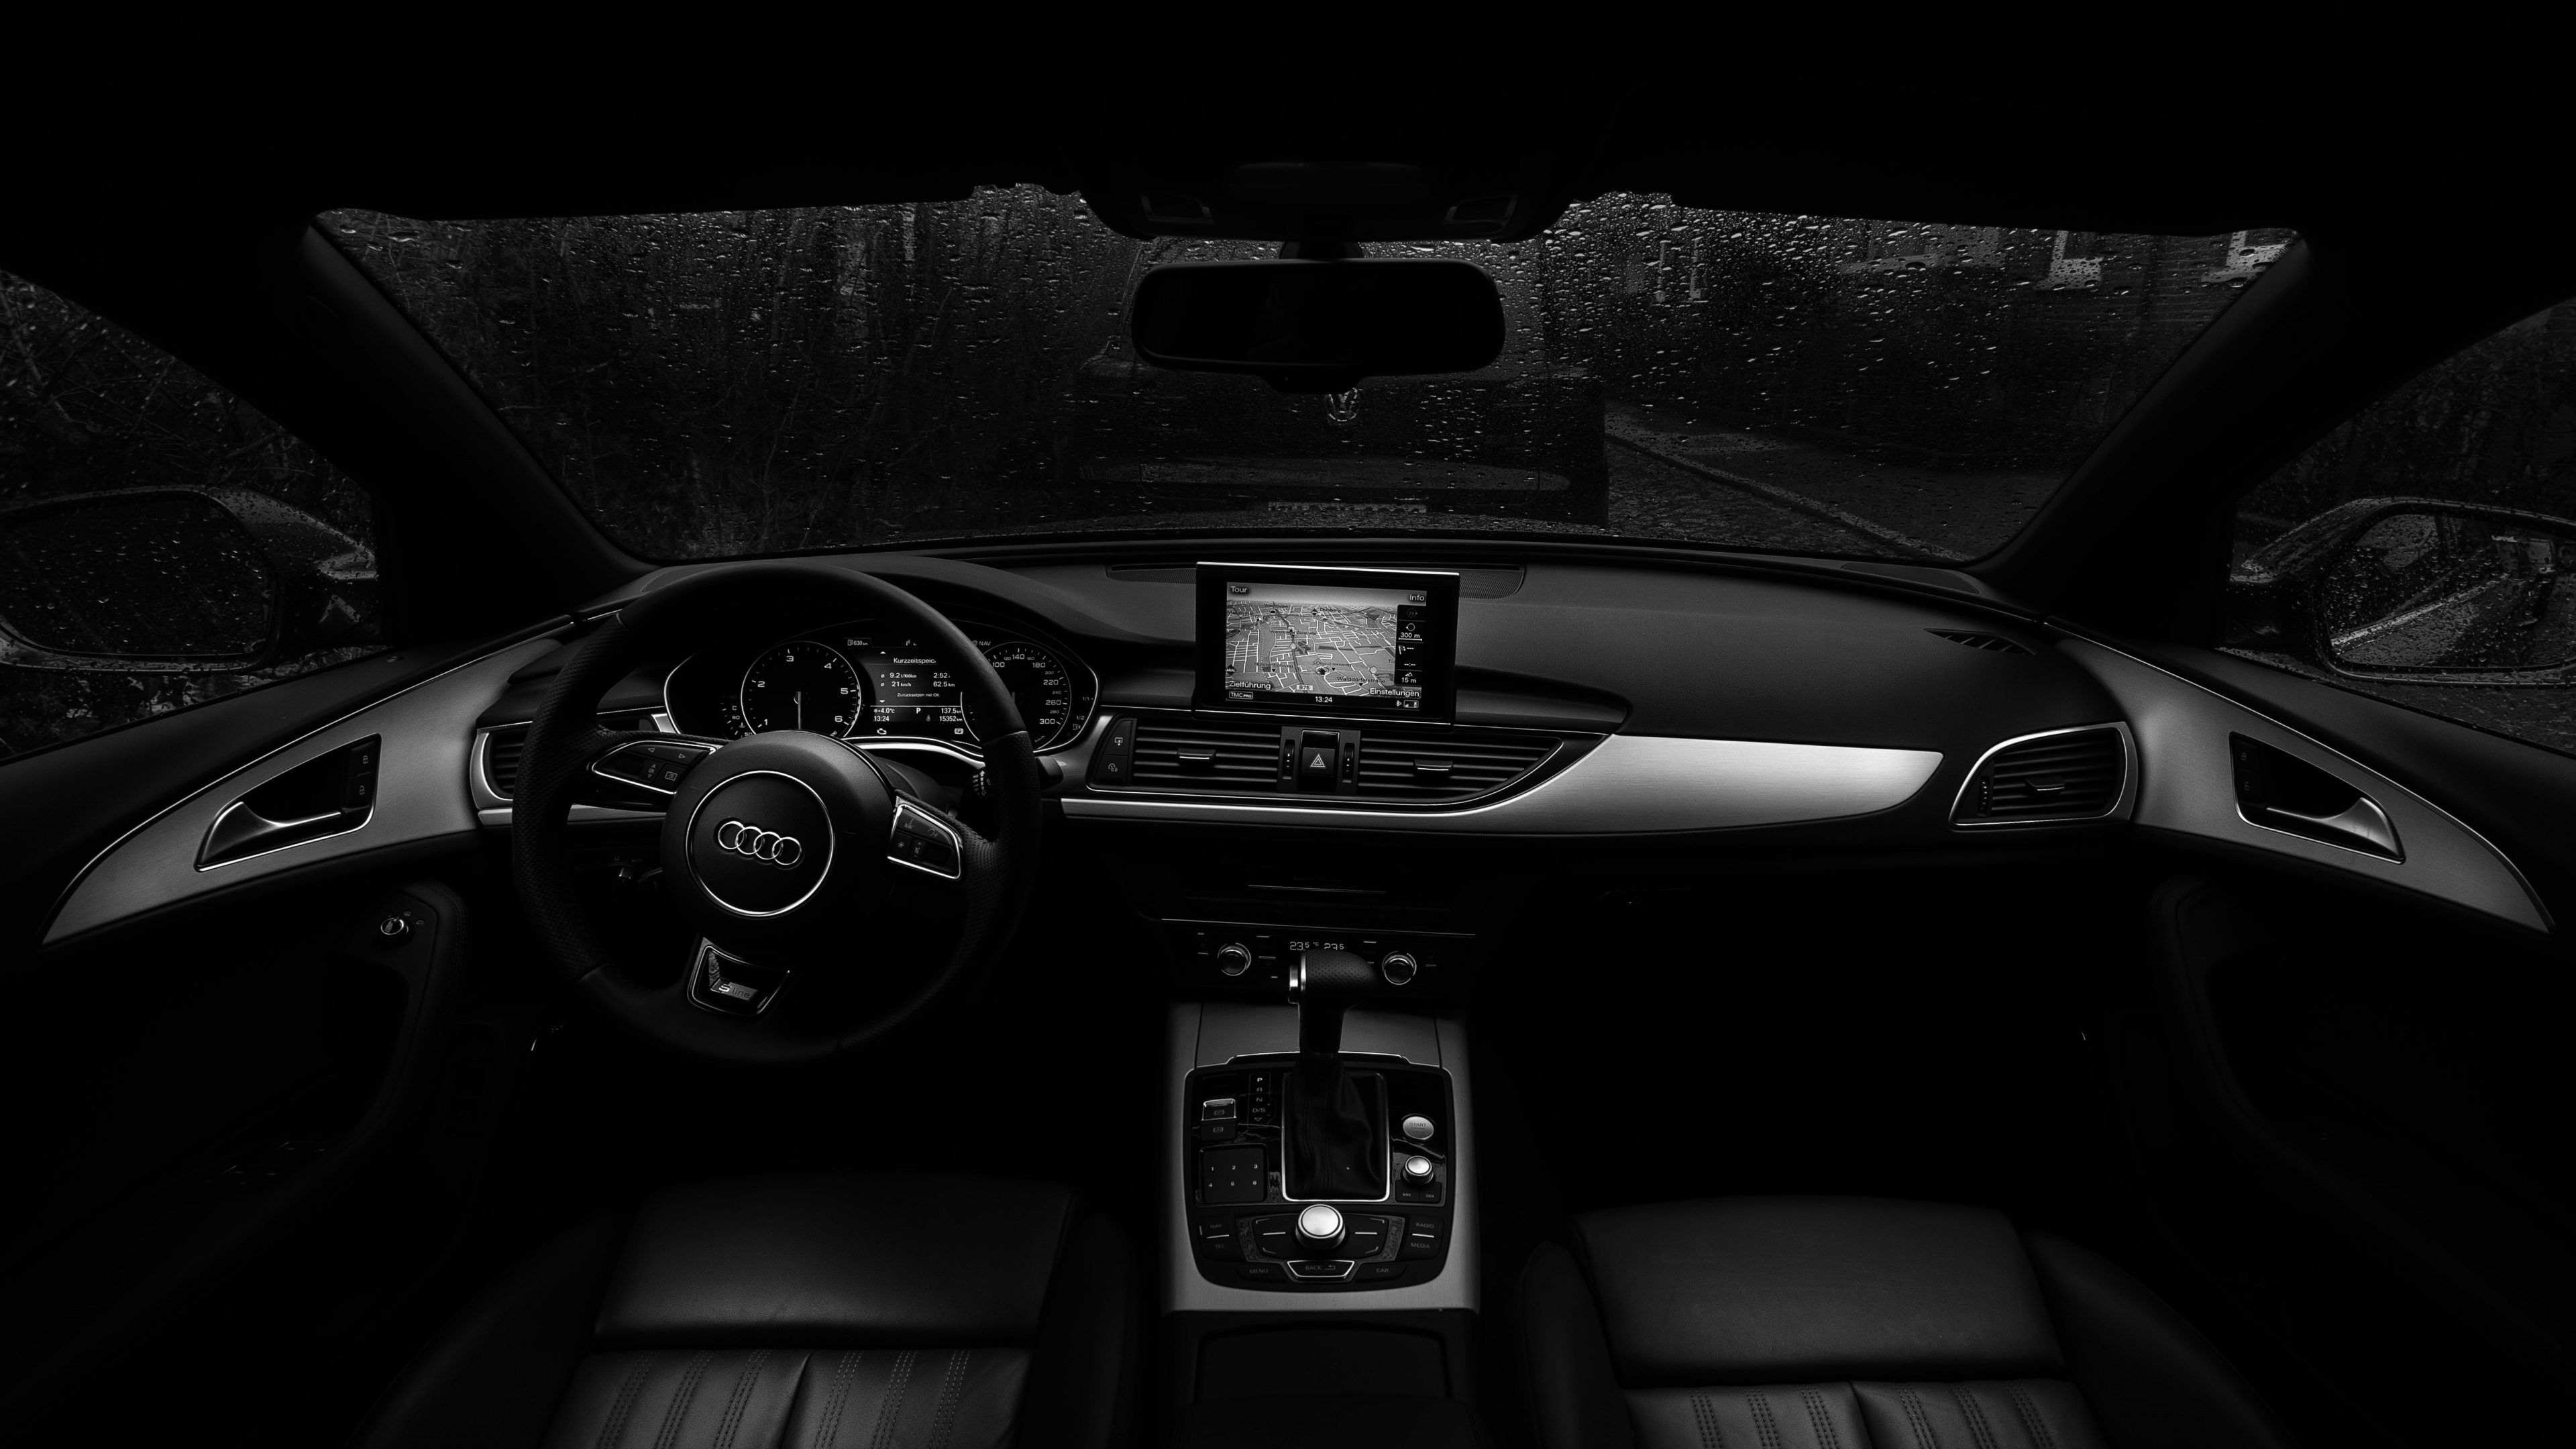 Black and Gray Car Interior. Wallpaper in 3840x2160 Resolution